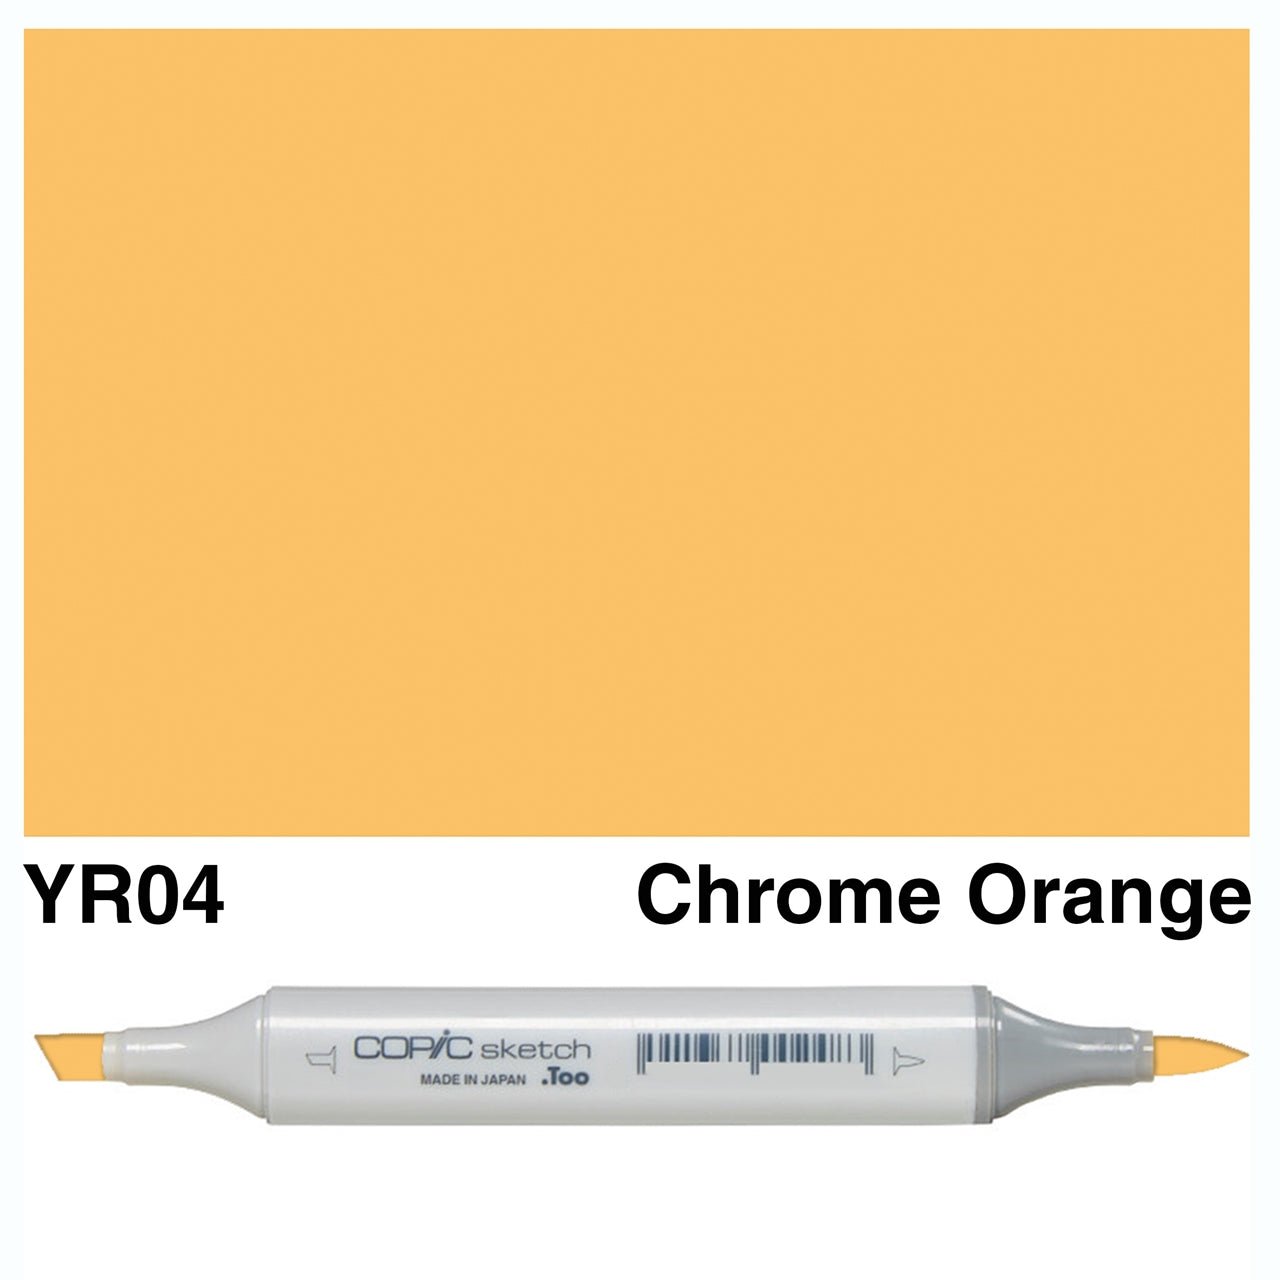 Copic Sketch YR04 Chrome Orange - theartshop.com.au